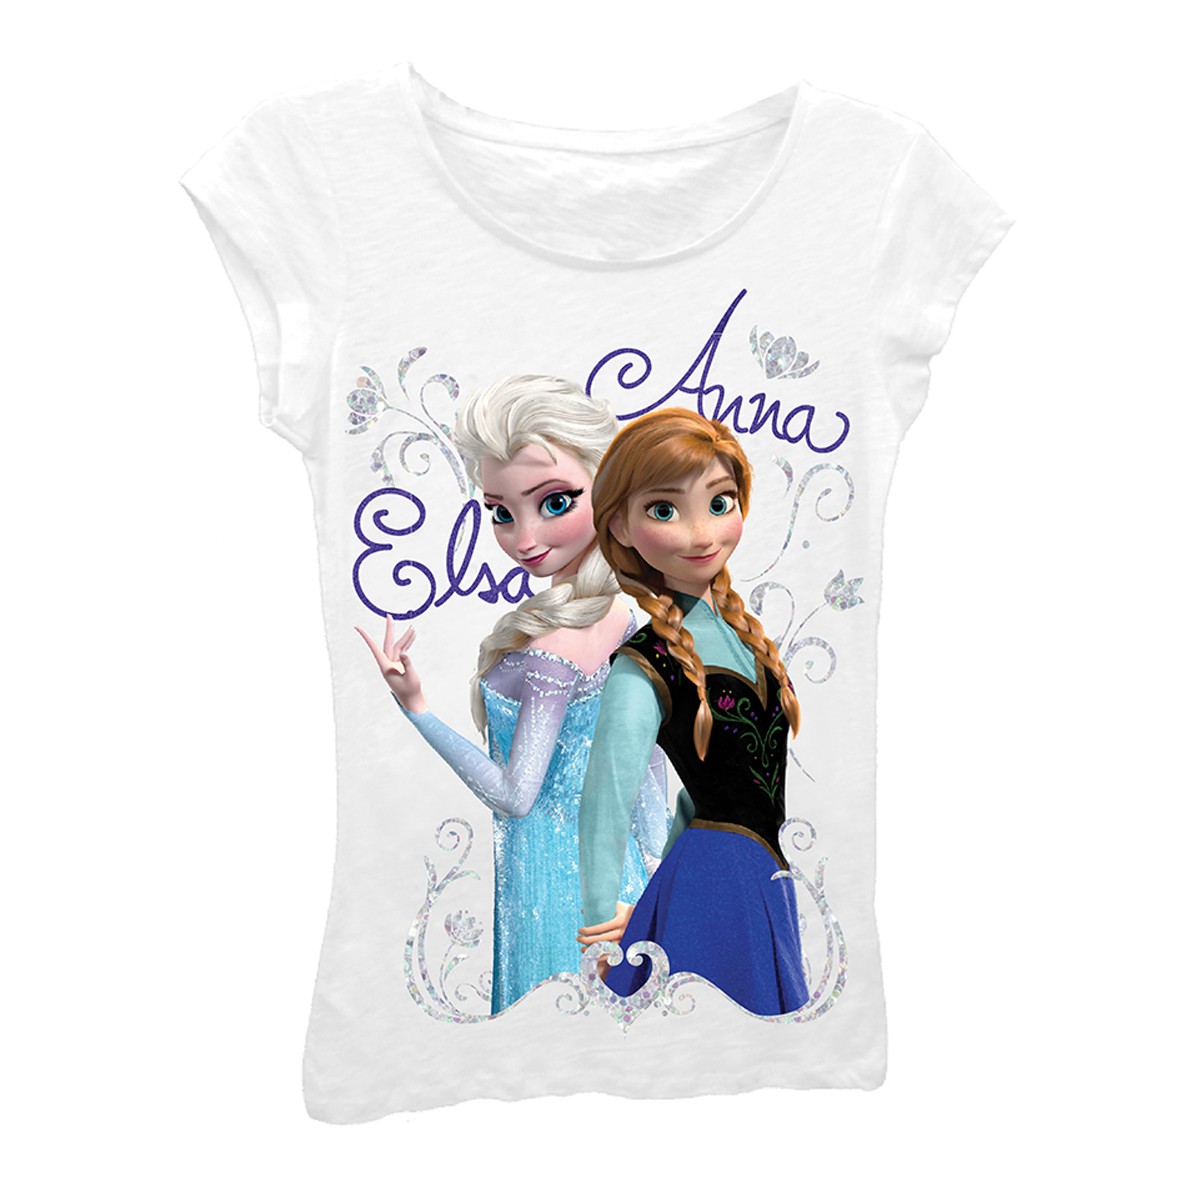 Disney Frozen Girls 7-16 White Elsa And Anna Tee Shirt